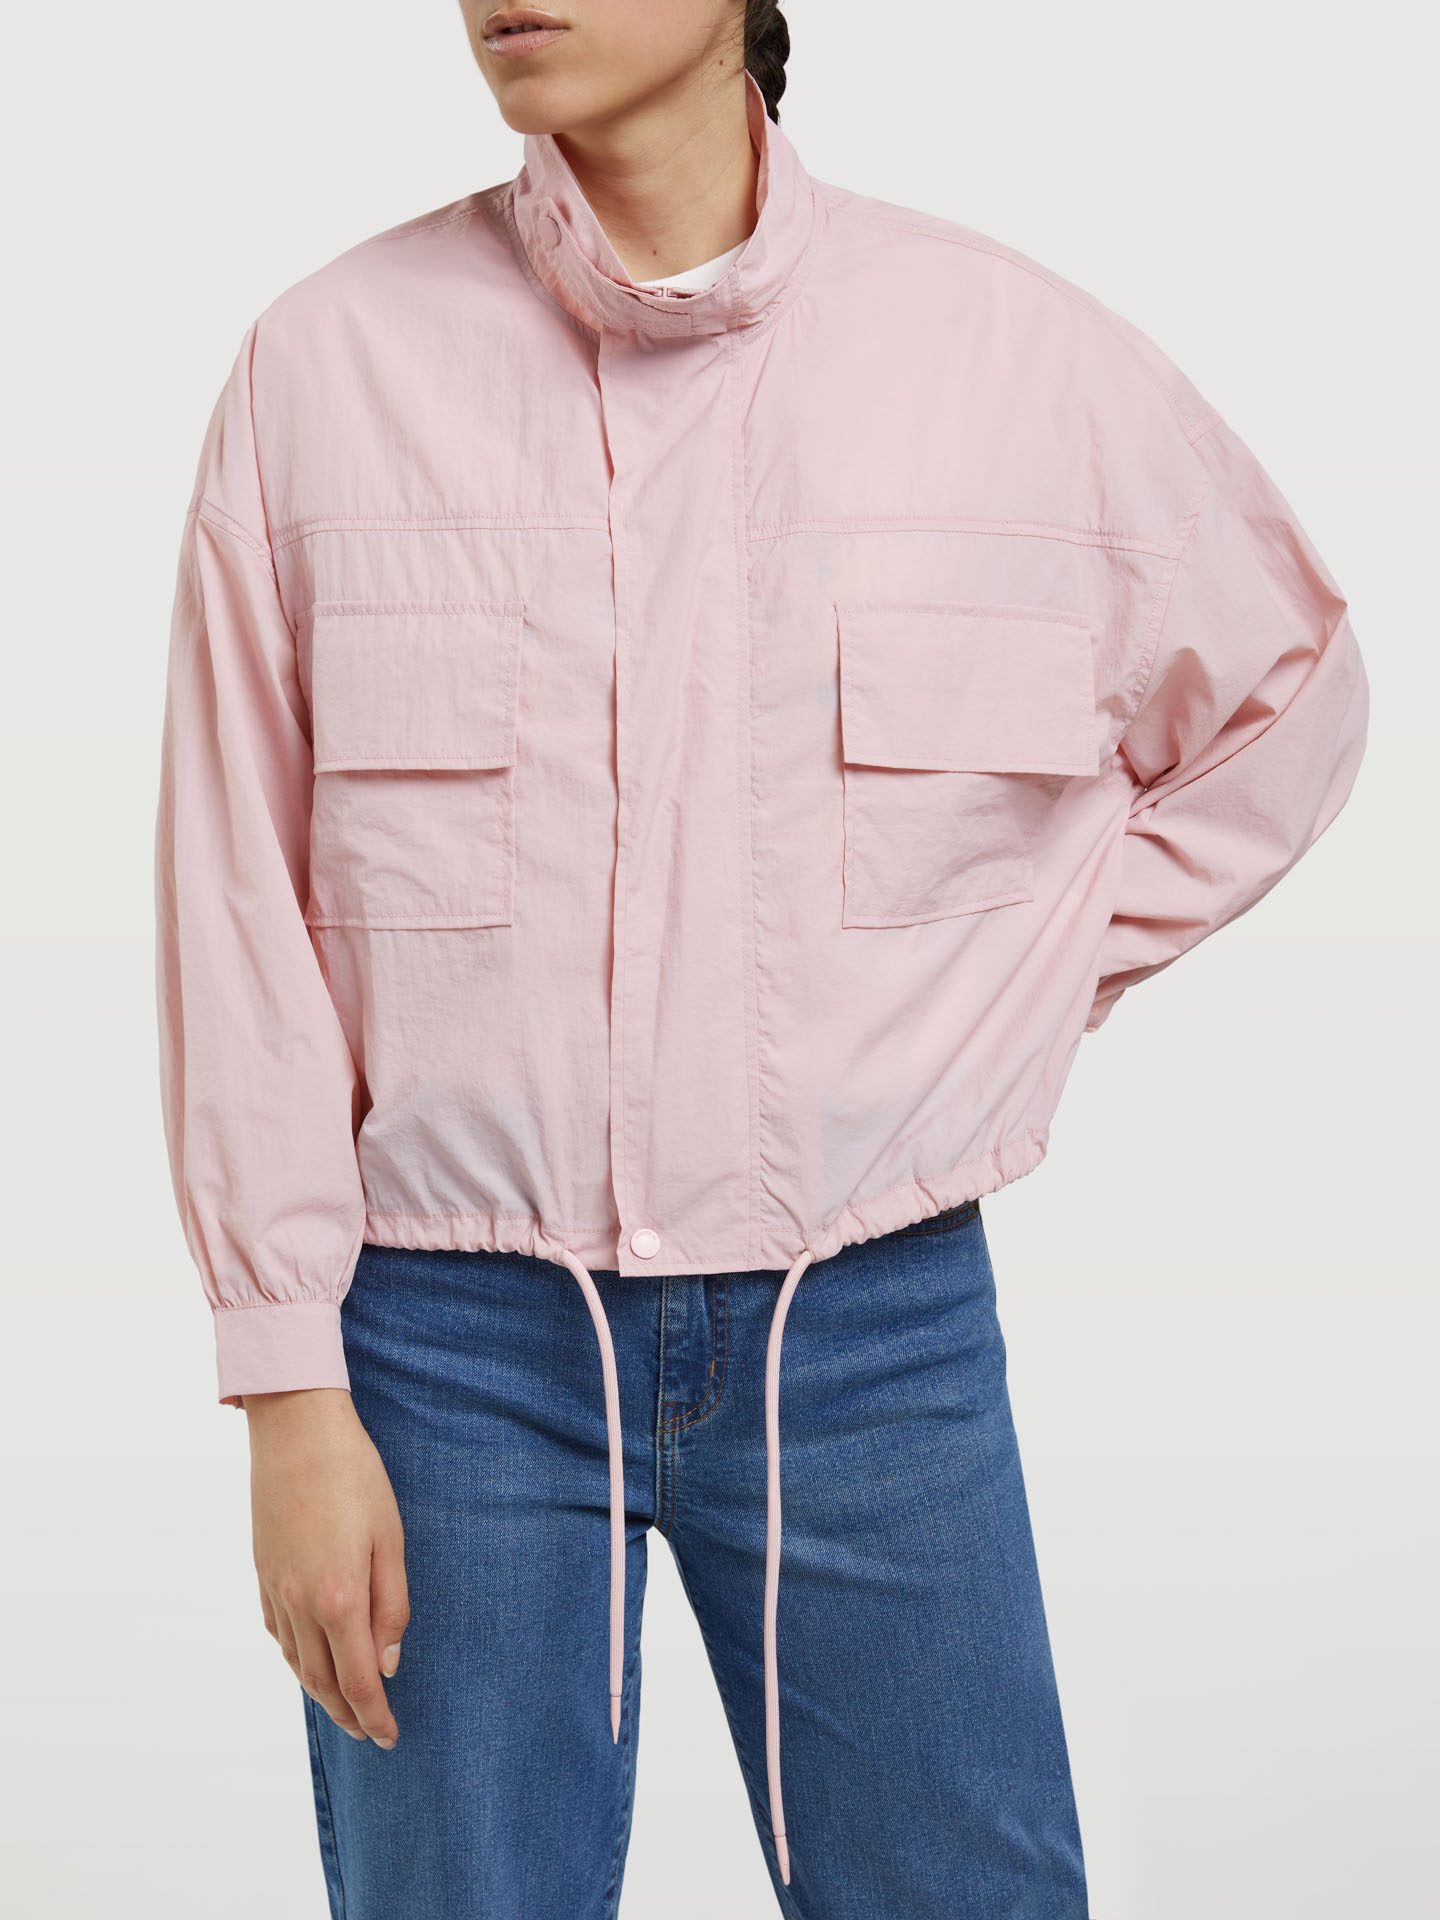 Jacket Light Pink Casual Woman